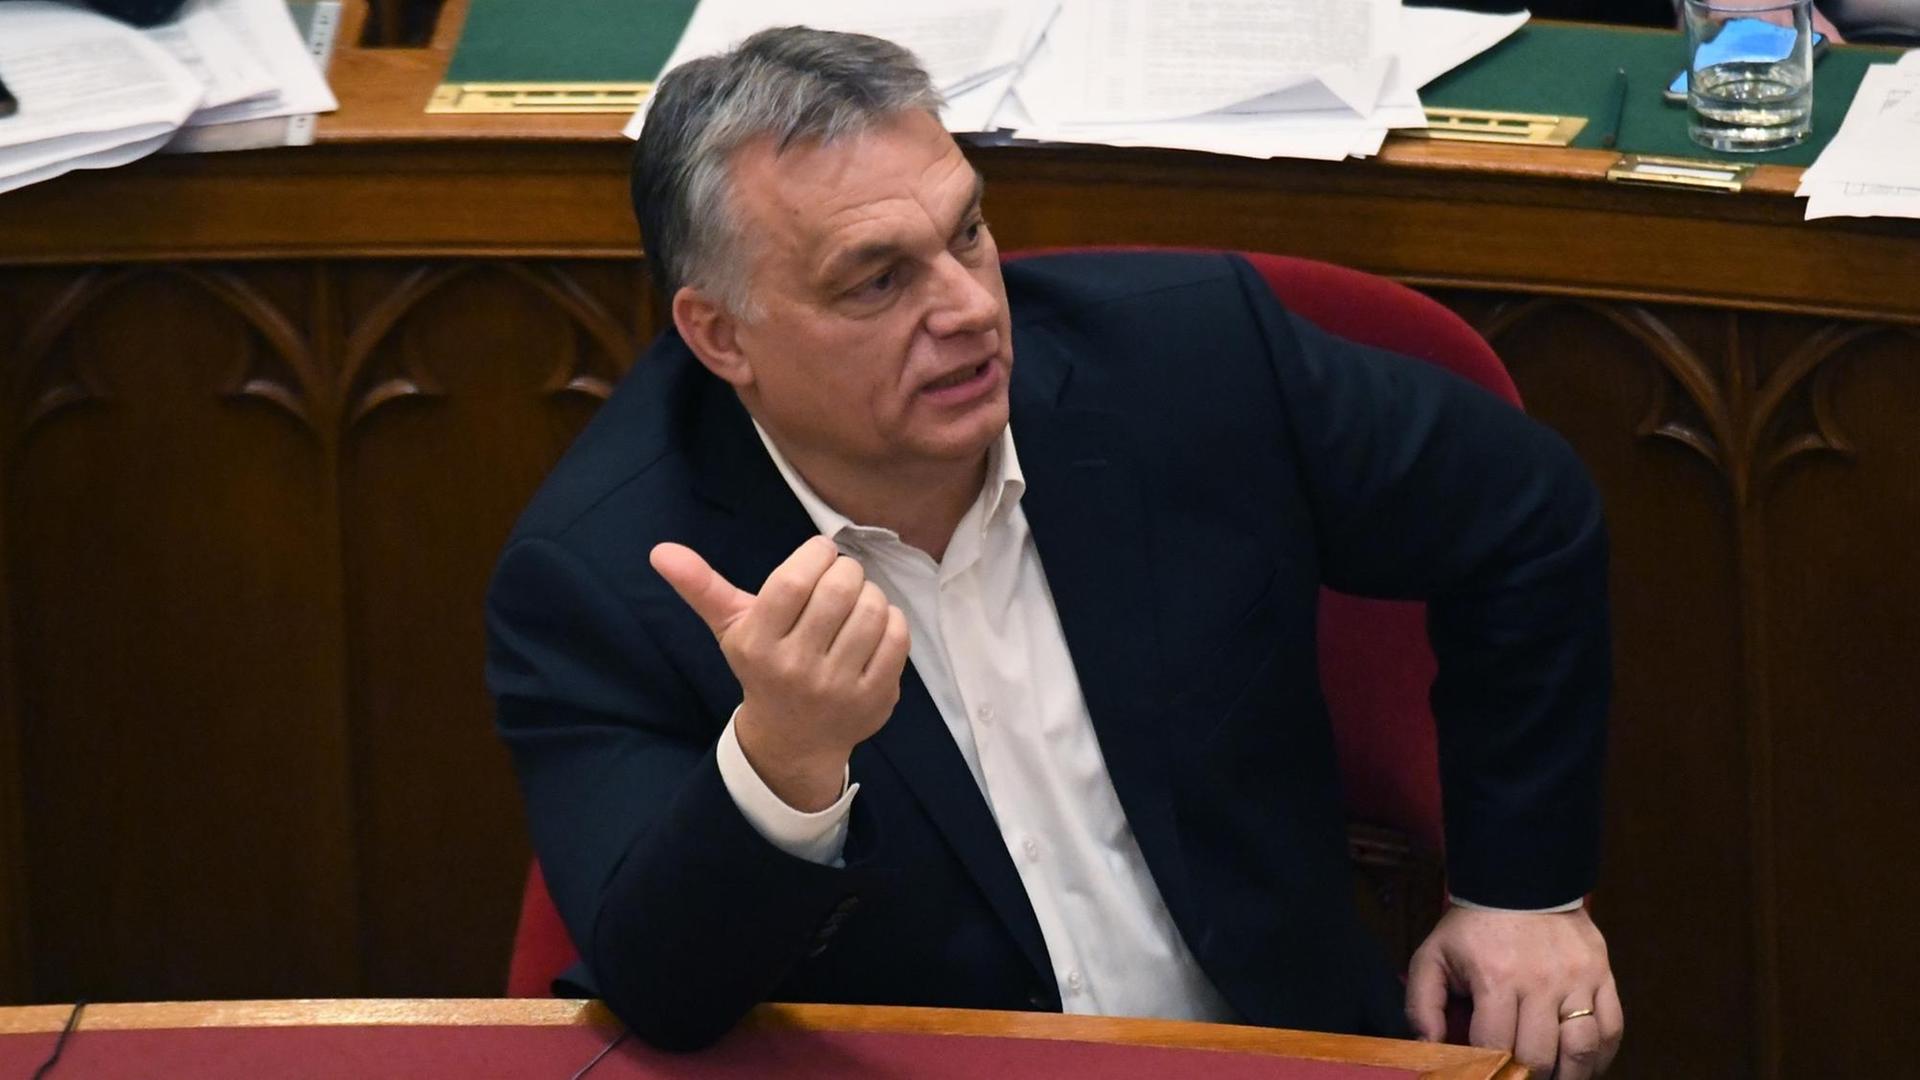 Victor Orbán im Porträt